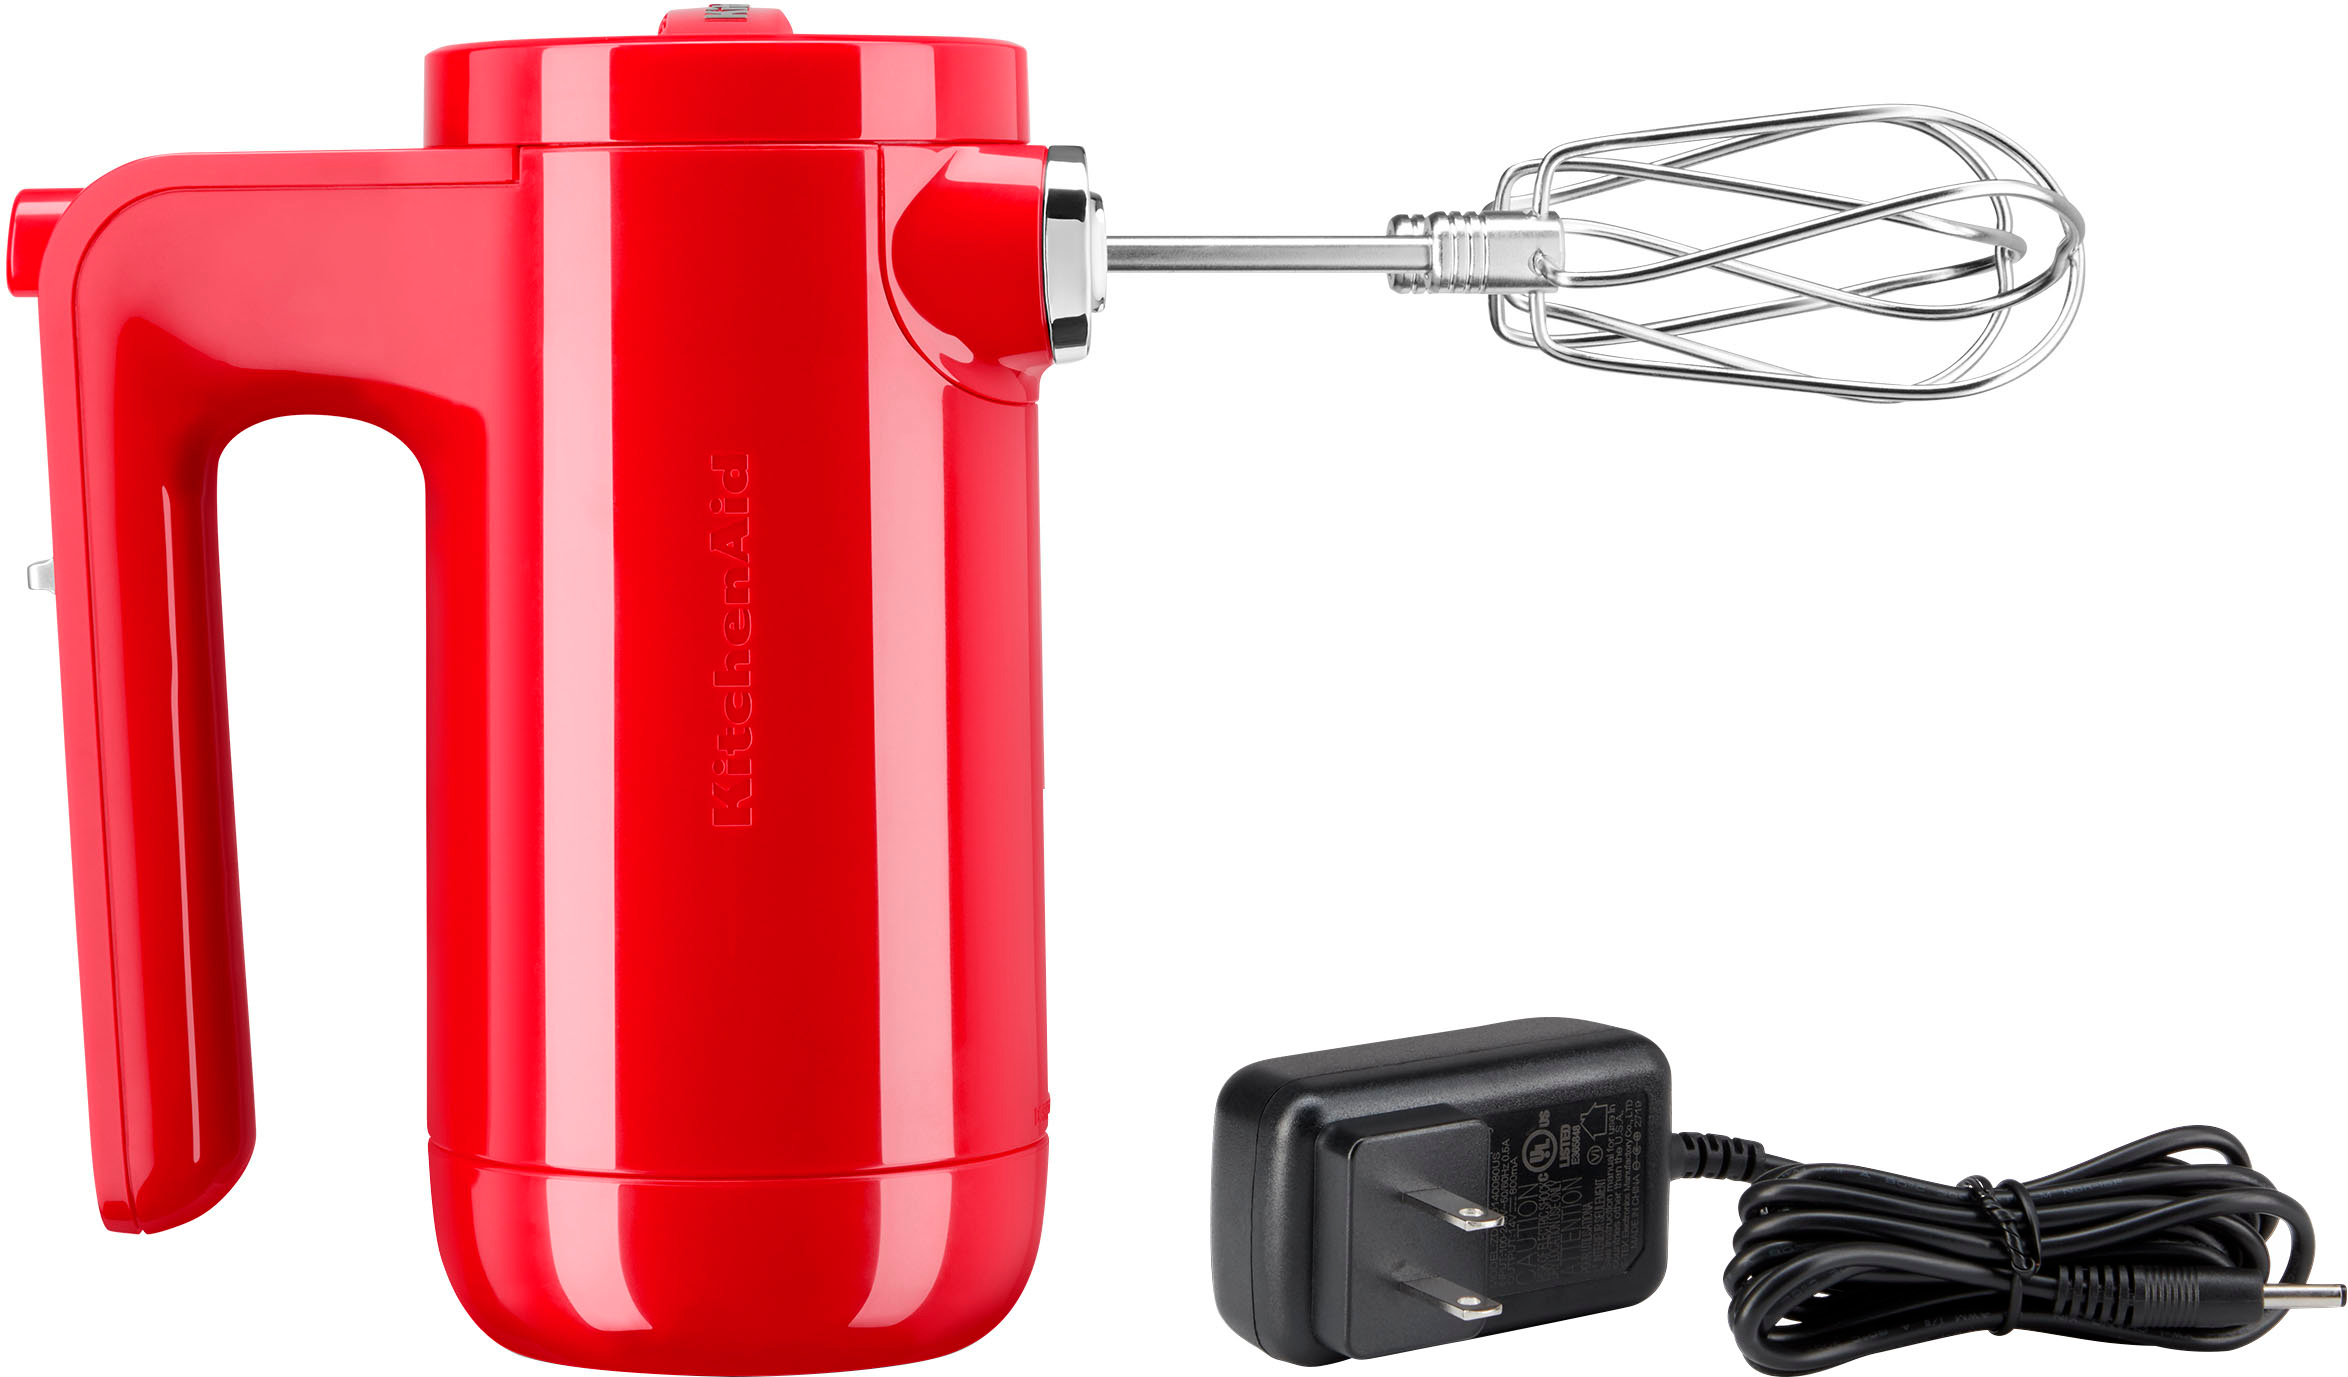 Cuisinart Power Advantage 7-Speed Hand Mixer, Red 